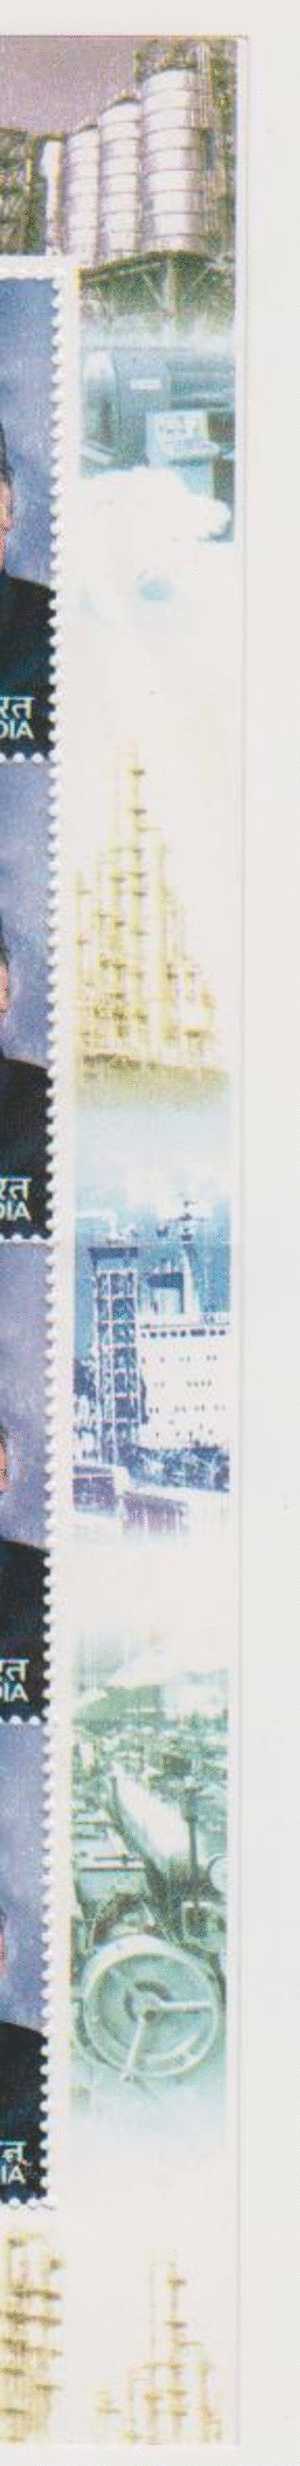 India 2002 MNH, Ambani, MS, Sheetlet, Industrialist, Famous People, Ship, Textiles, Oil Refinery, - Blocks & Kleinbögen